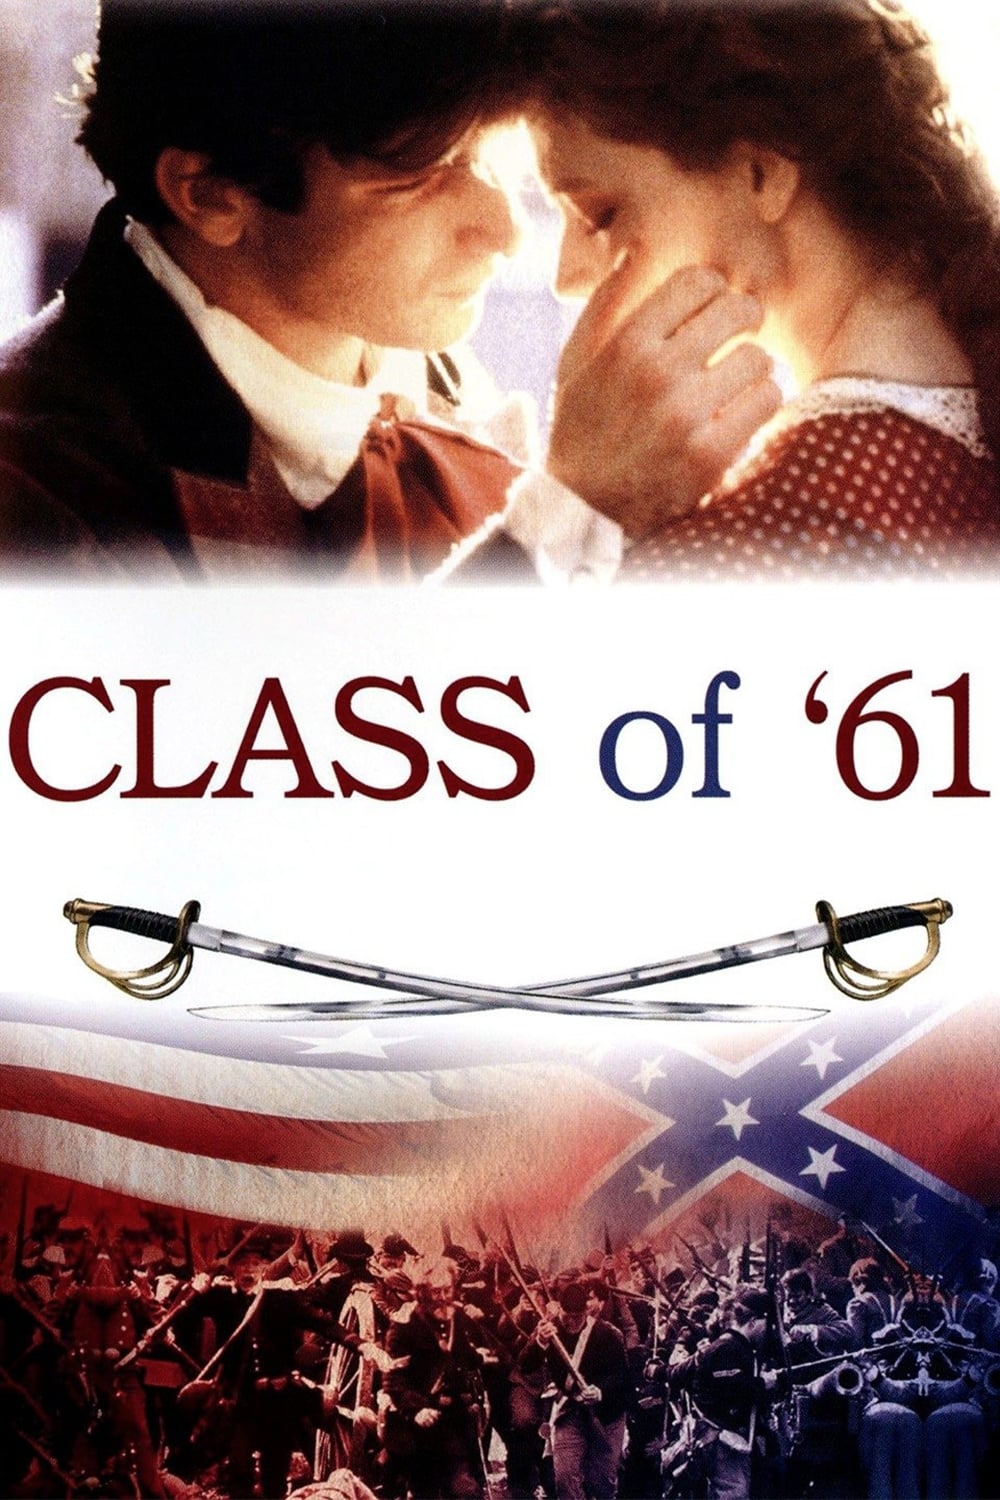 Class of '61 (1993)